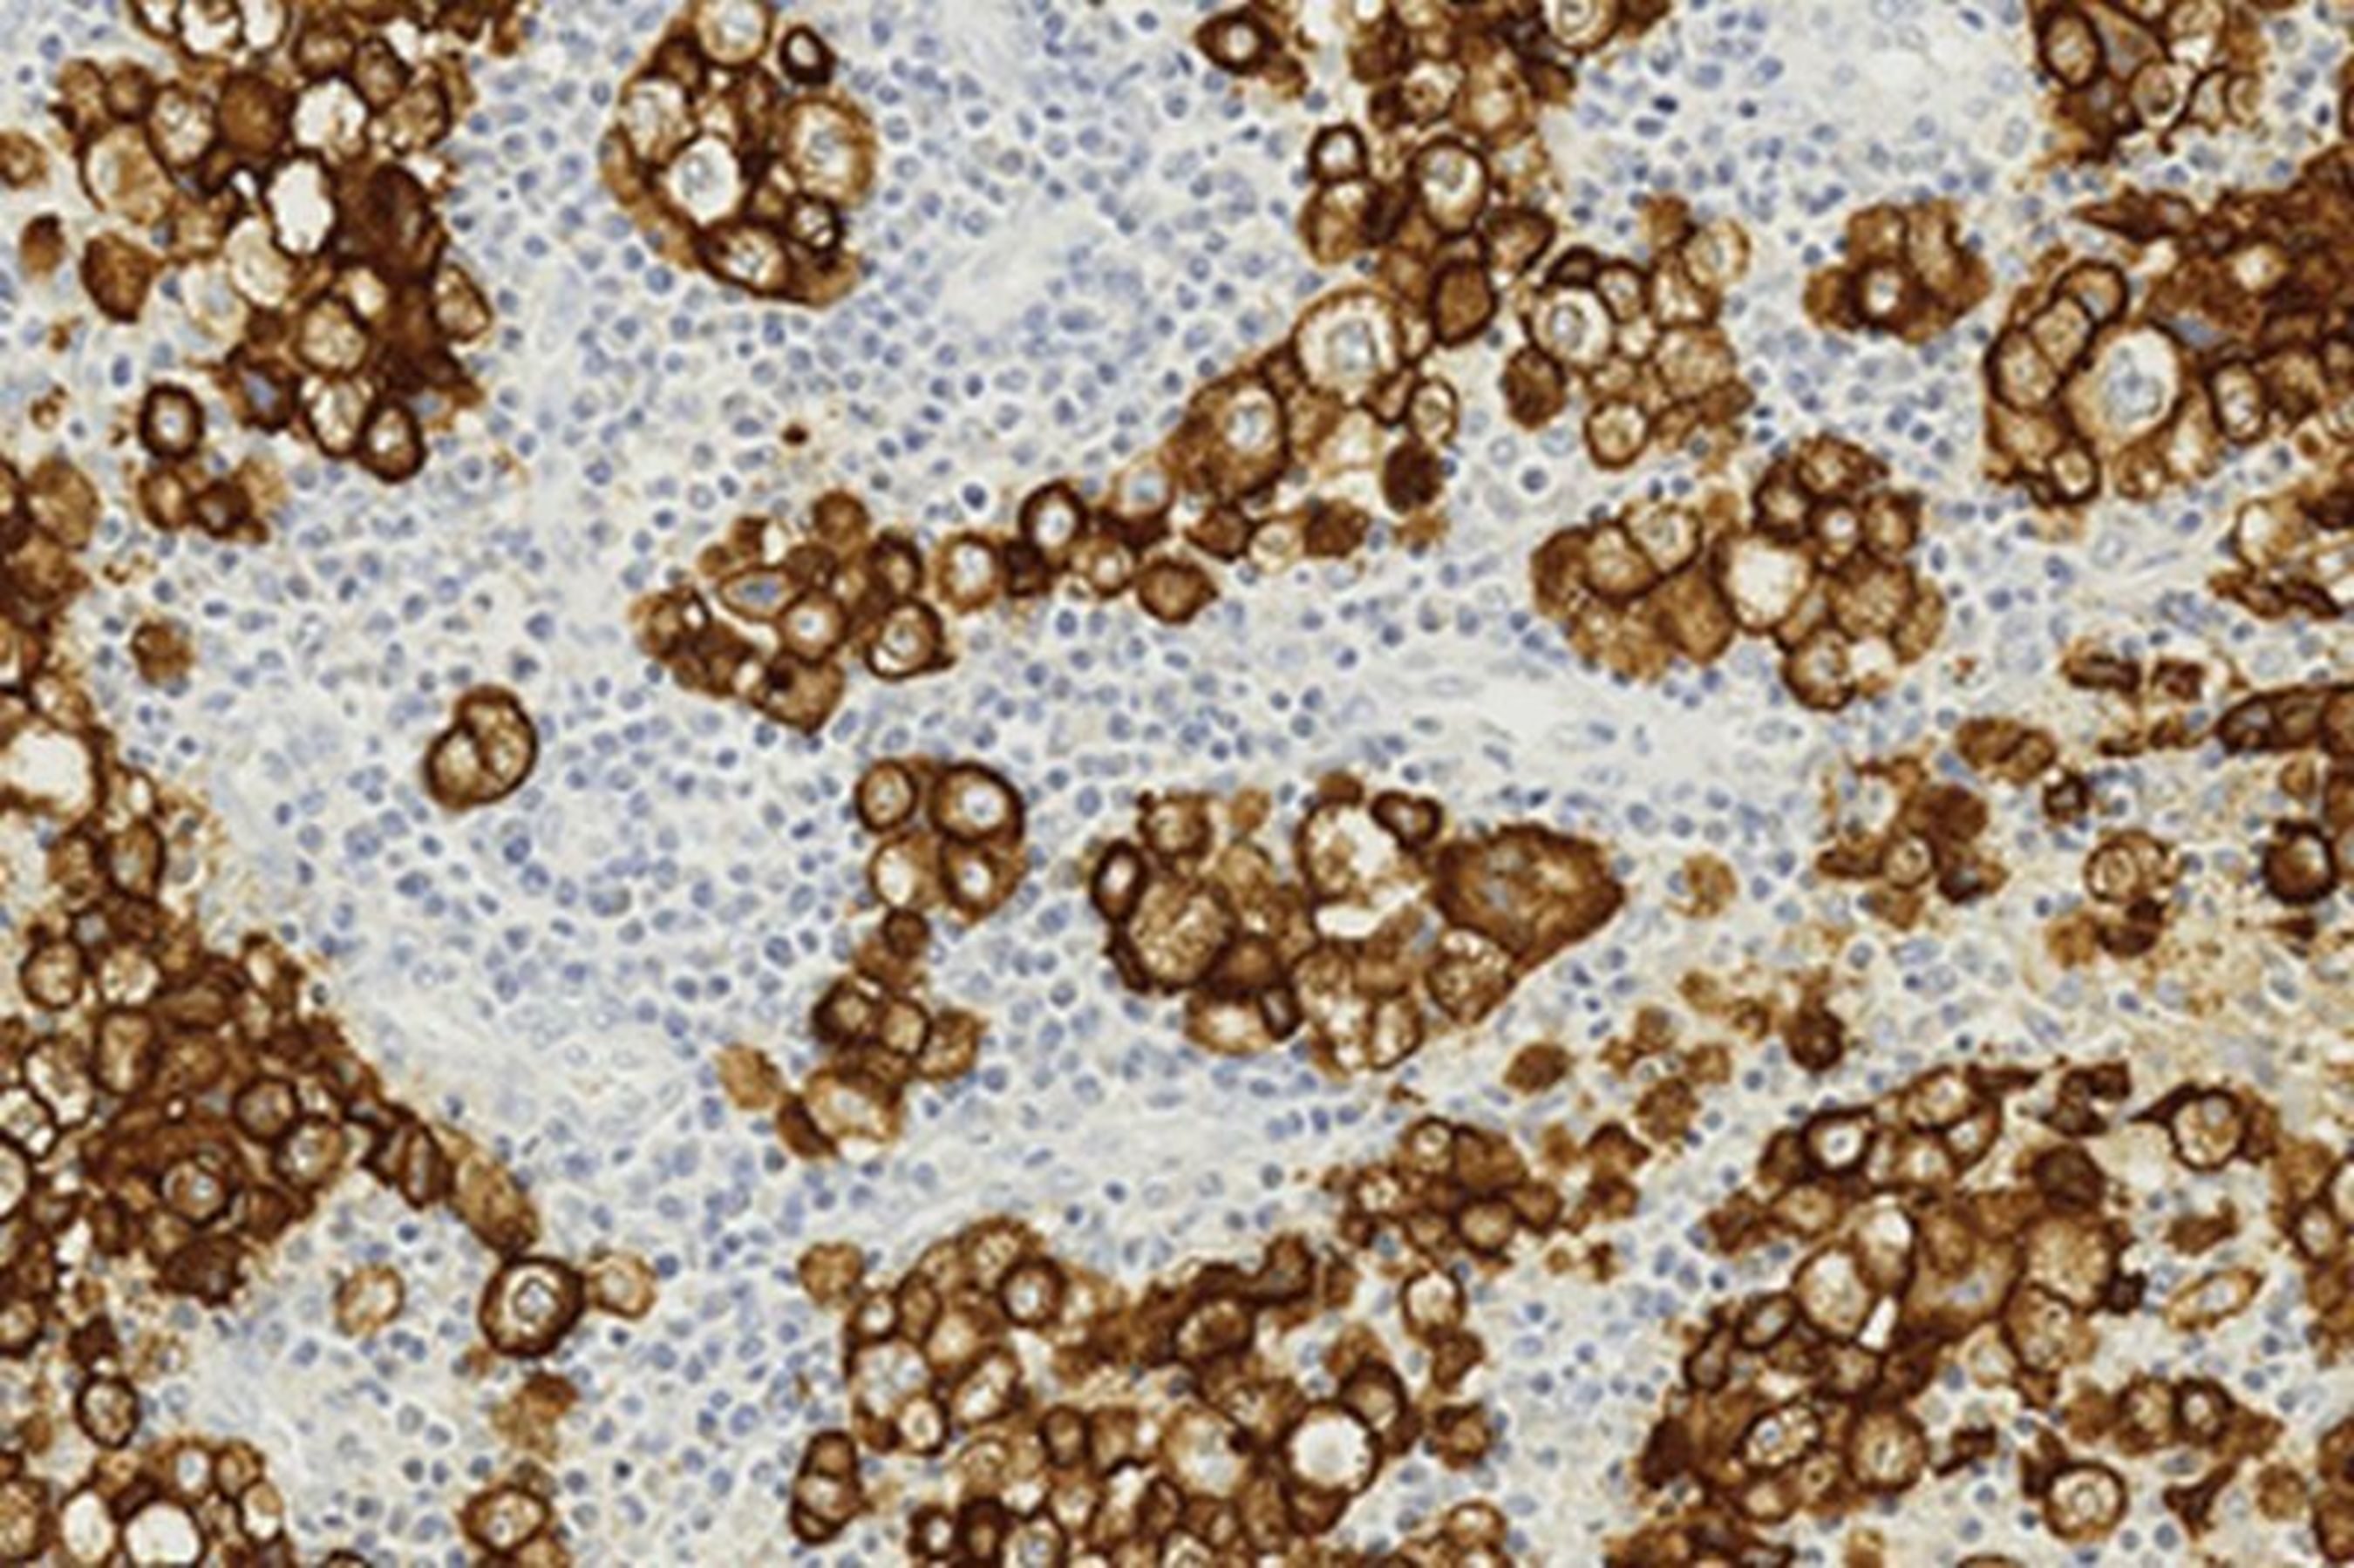 Human melanoma stained with Novocastra HD Melanoma Marker antibody, clone HMB45 (PRNewsFoto/Leica Biosystems)